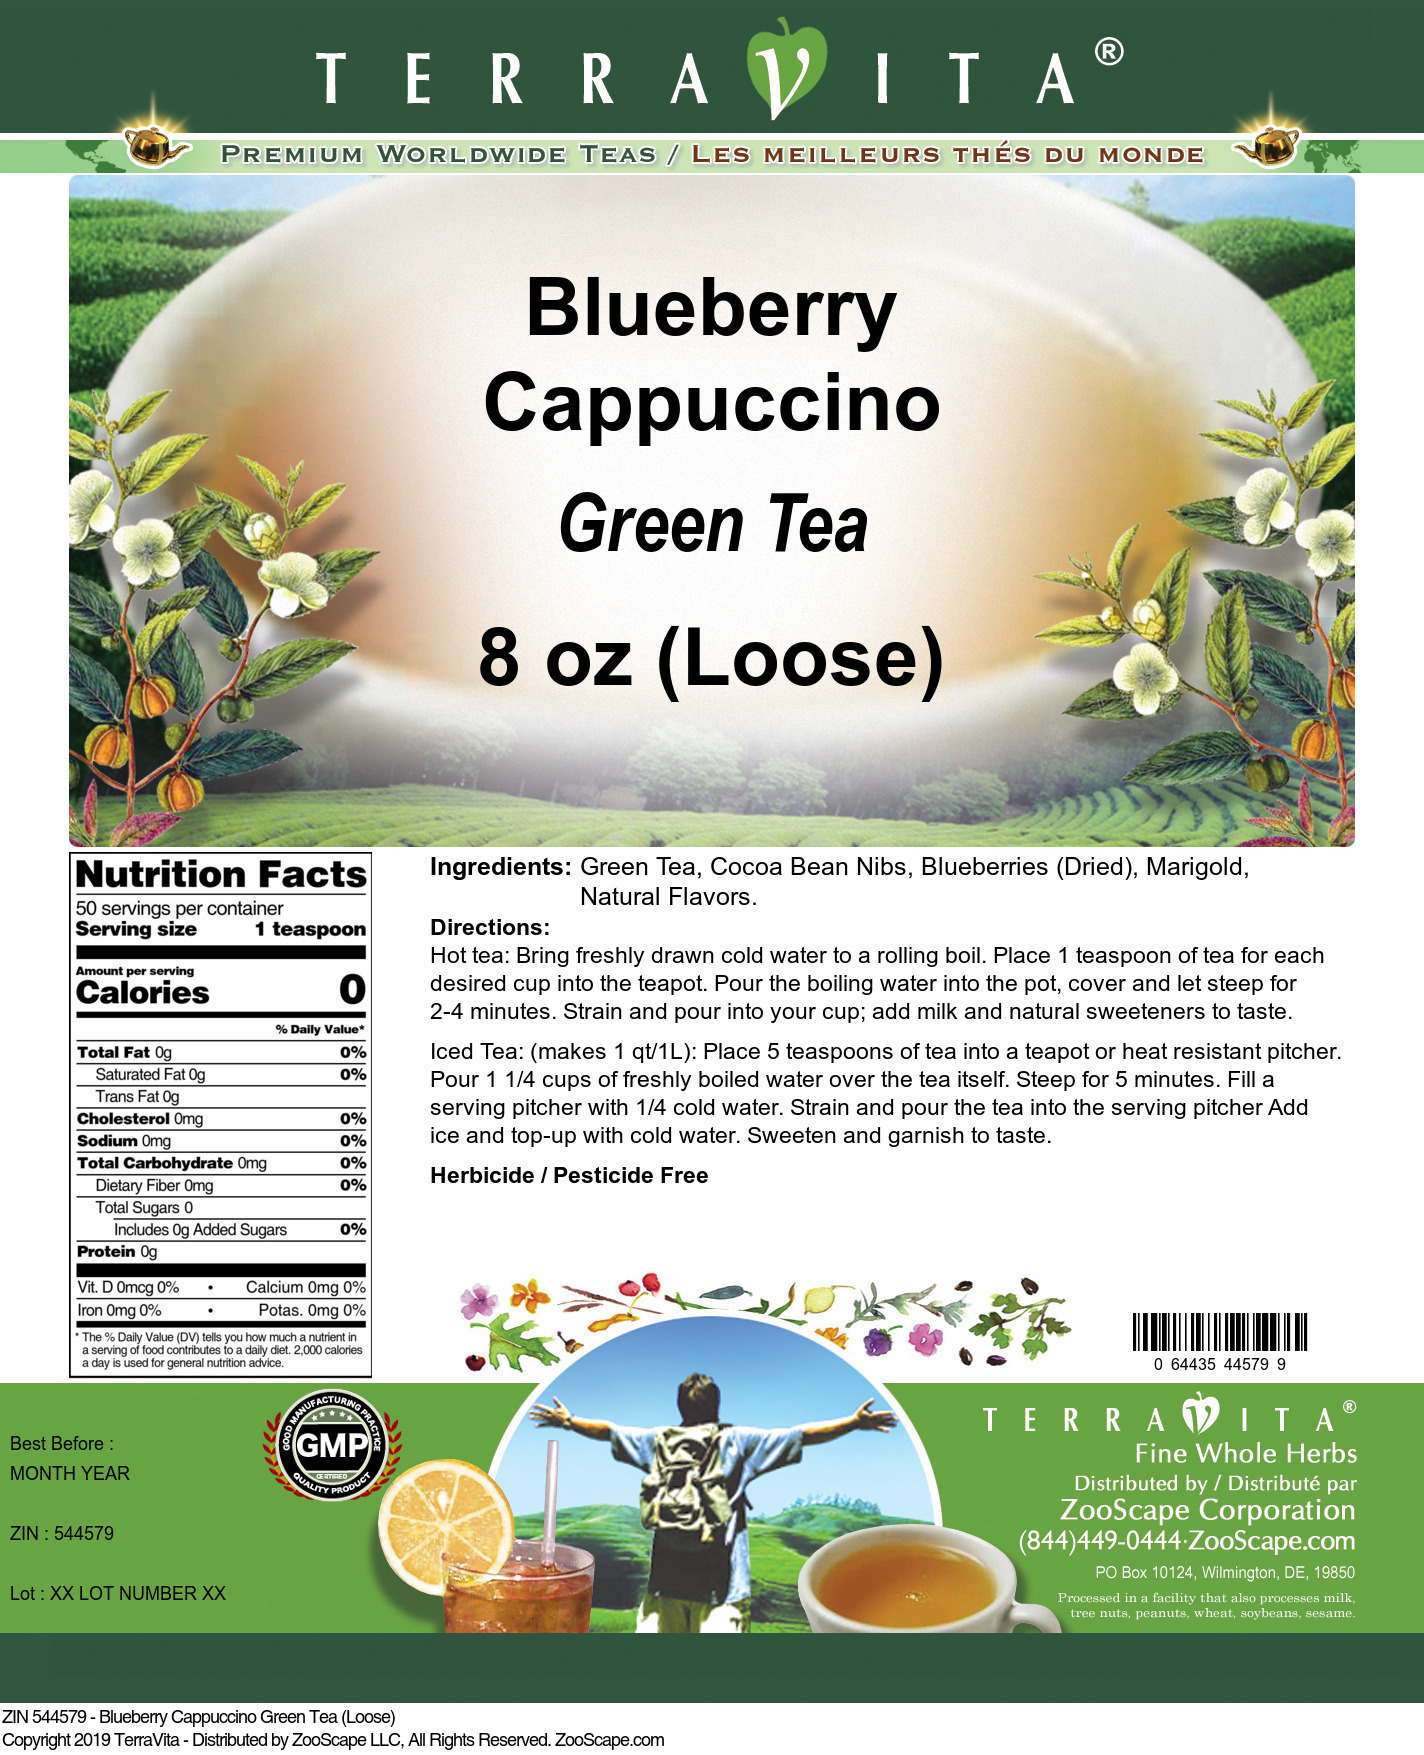 Blueberry Cappuccino Green Tea (Loose) - Label